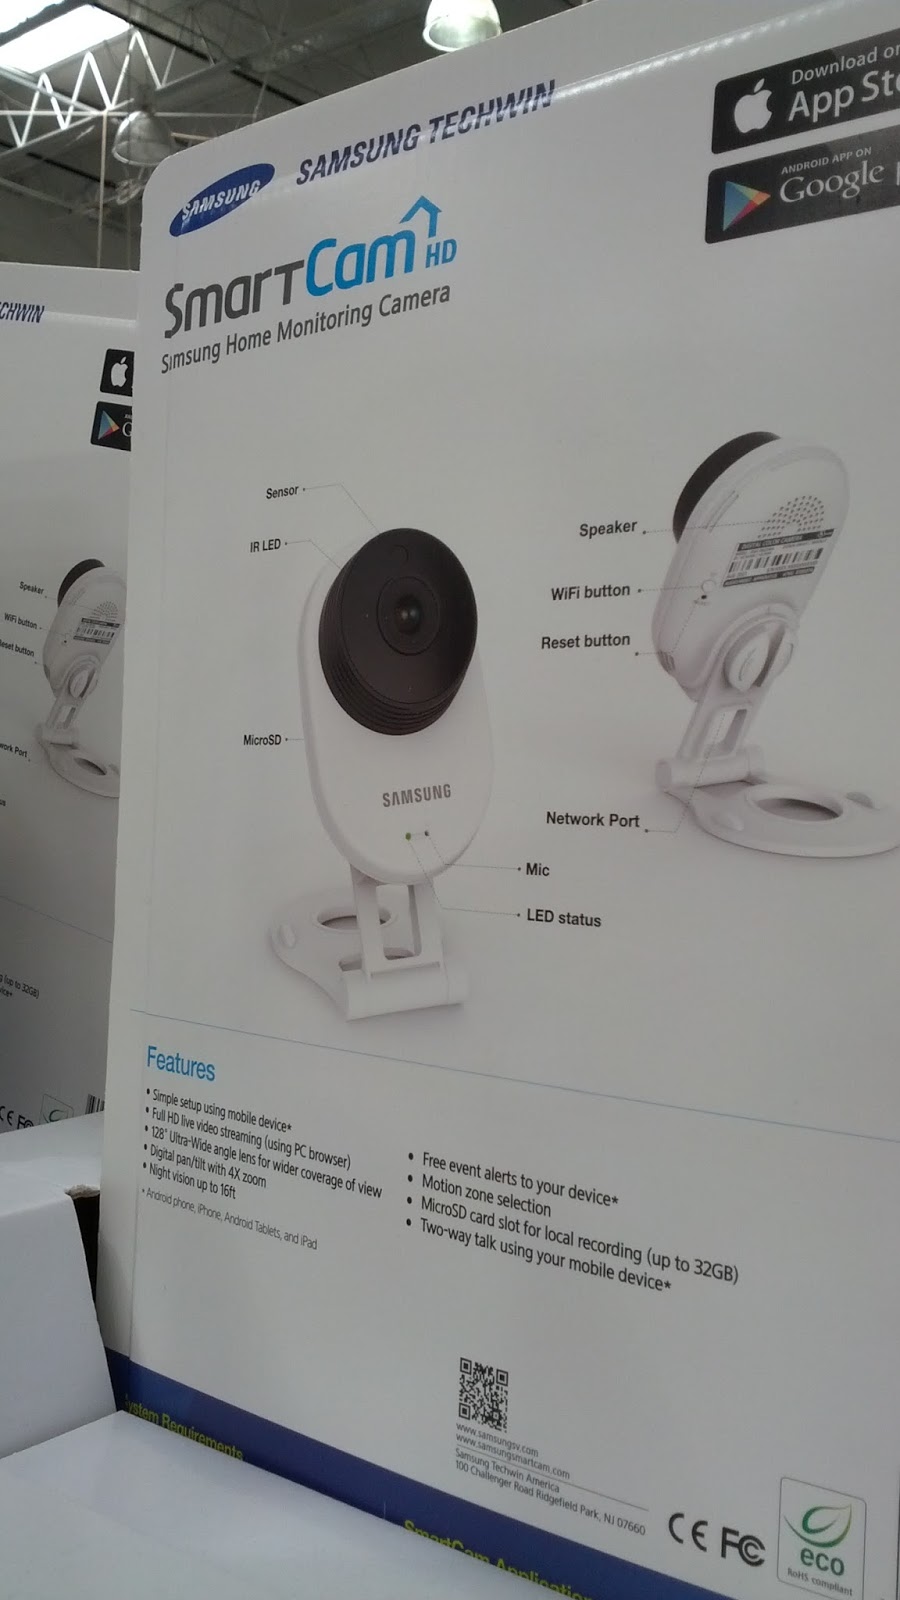 Samsung SmartCam 1080P HD Home Monitoring Surveillance